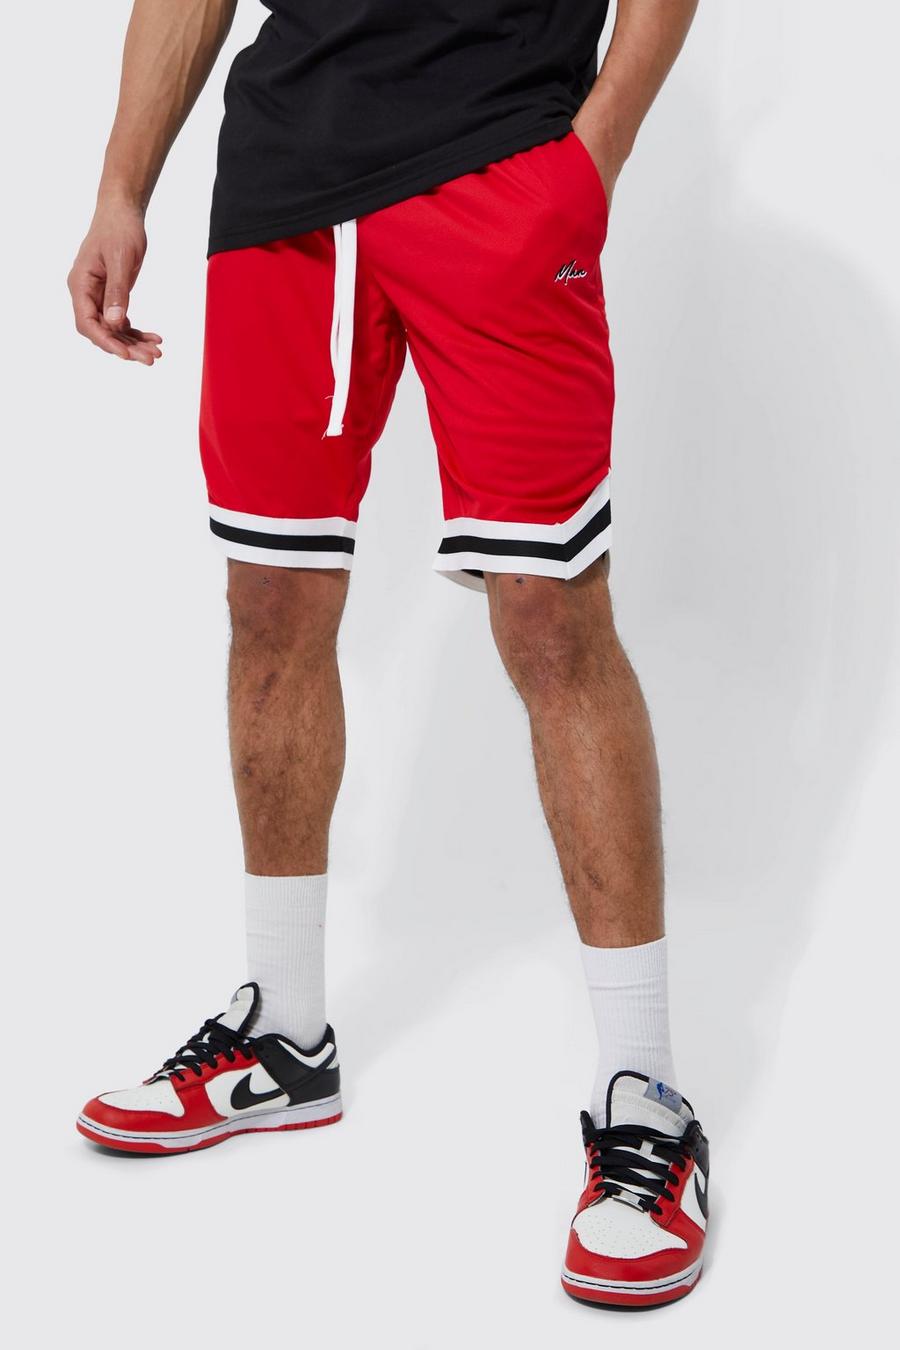 Pantalón corto Tall holgado MAN de malla estilo baloncesto, Red image number 1